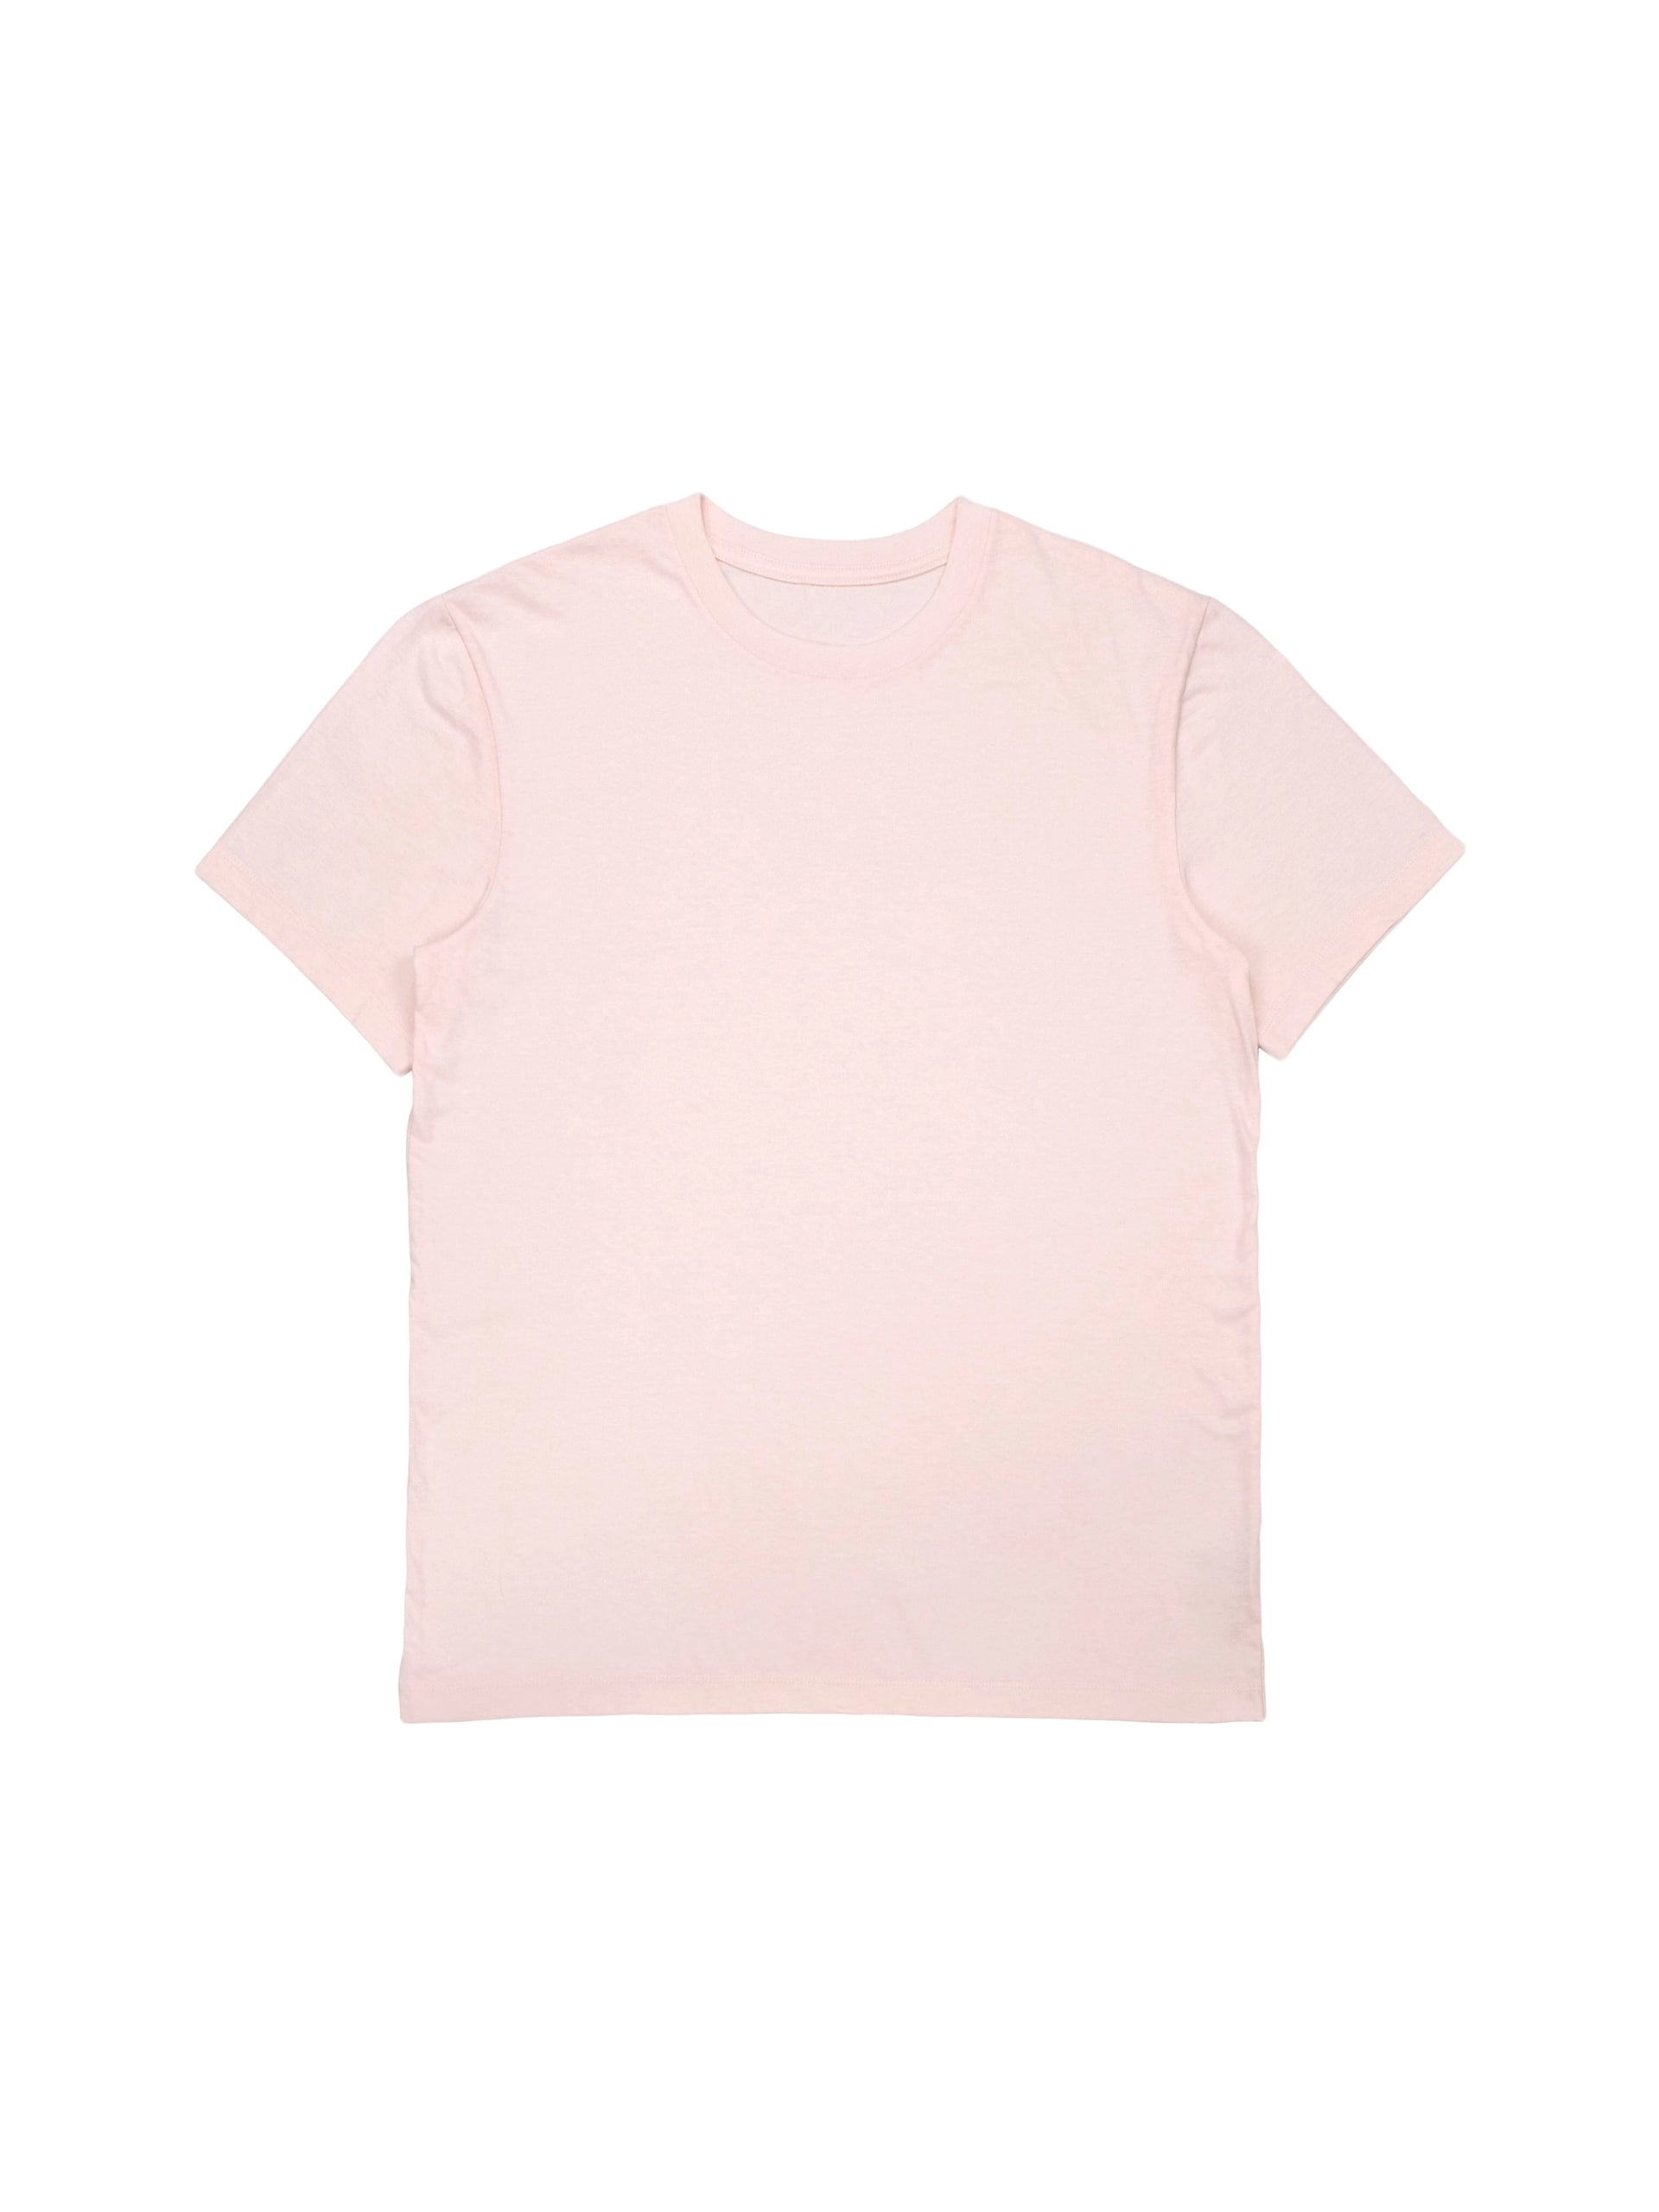 Pale Pink Luxe T-Shirt - FLEURISH